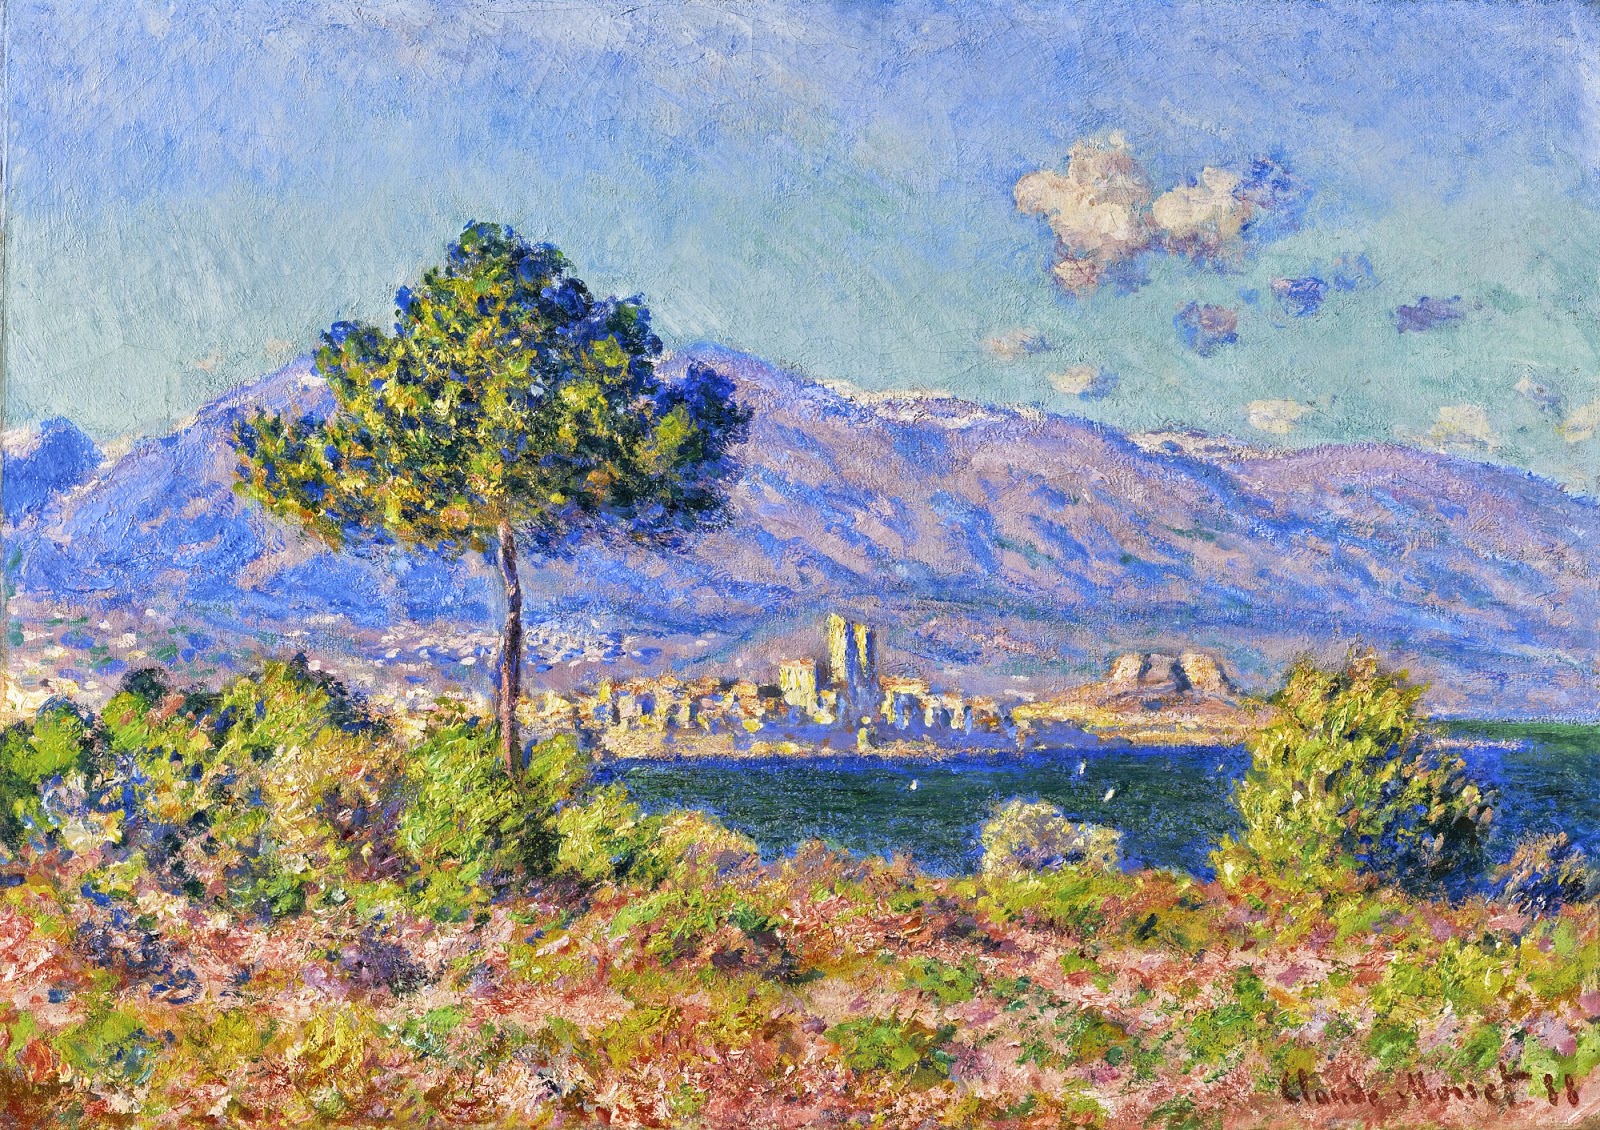 Claude+Monet-1840-1926 (501).jpg